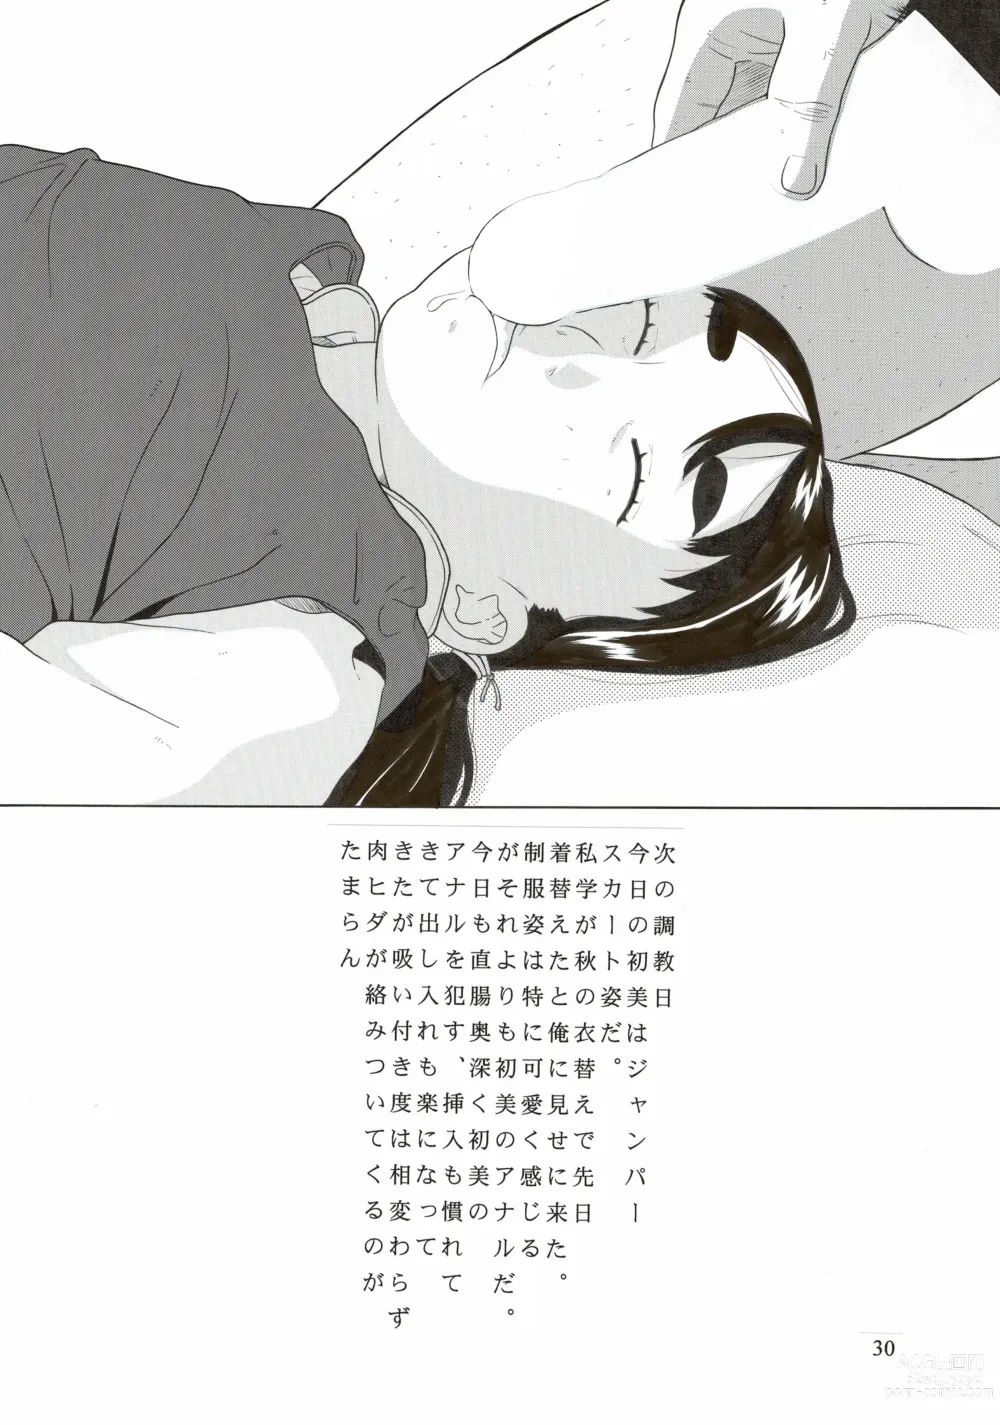 Page 32 of doujinshi Rinkaiten